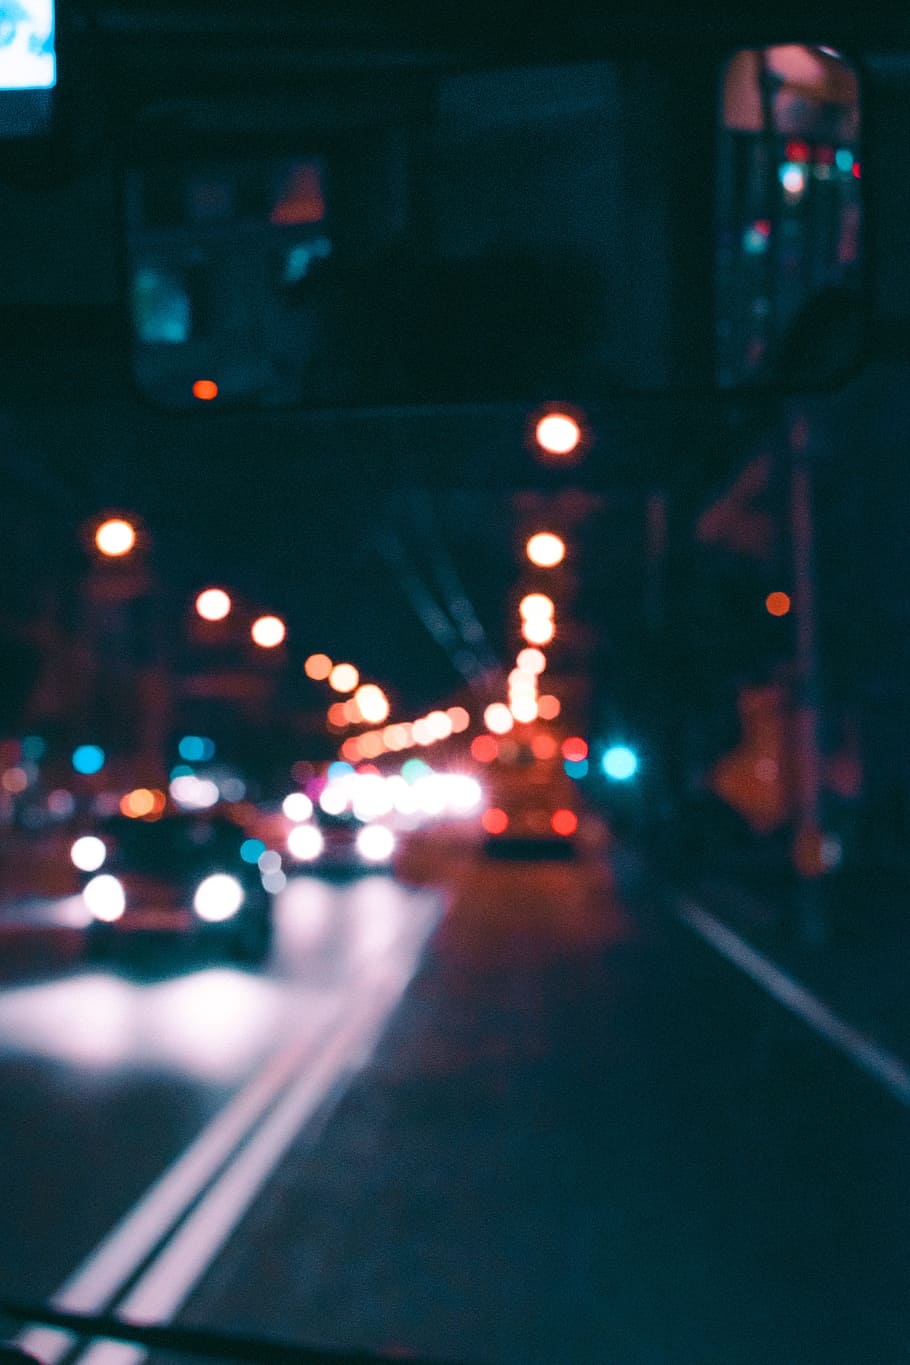 HD wallpaper: bokeh photography of vehicles on street at night, traffic ...